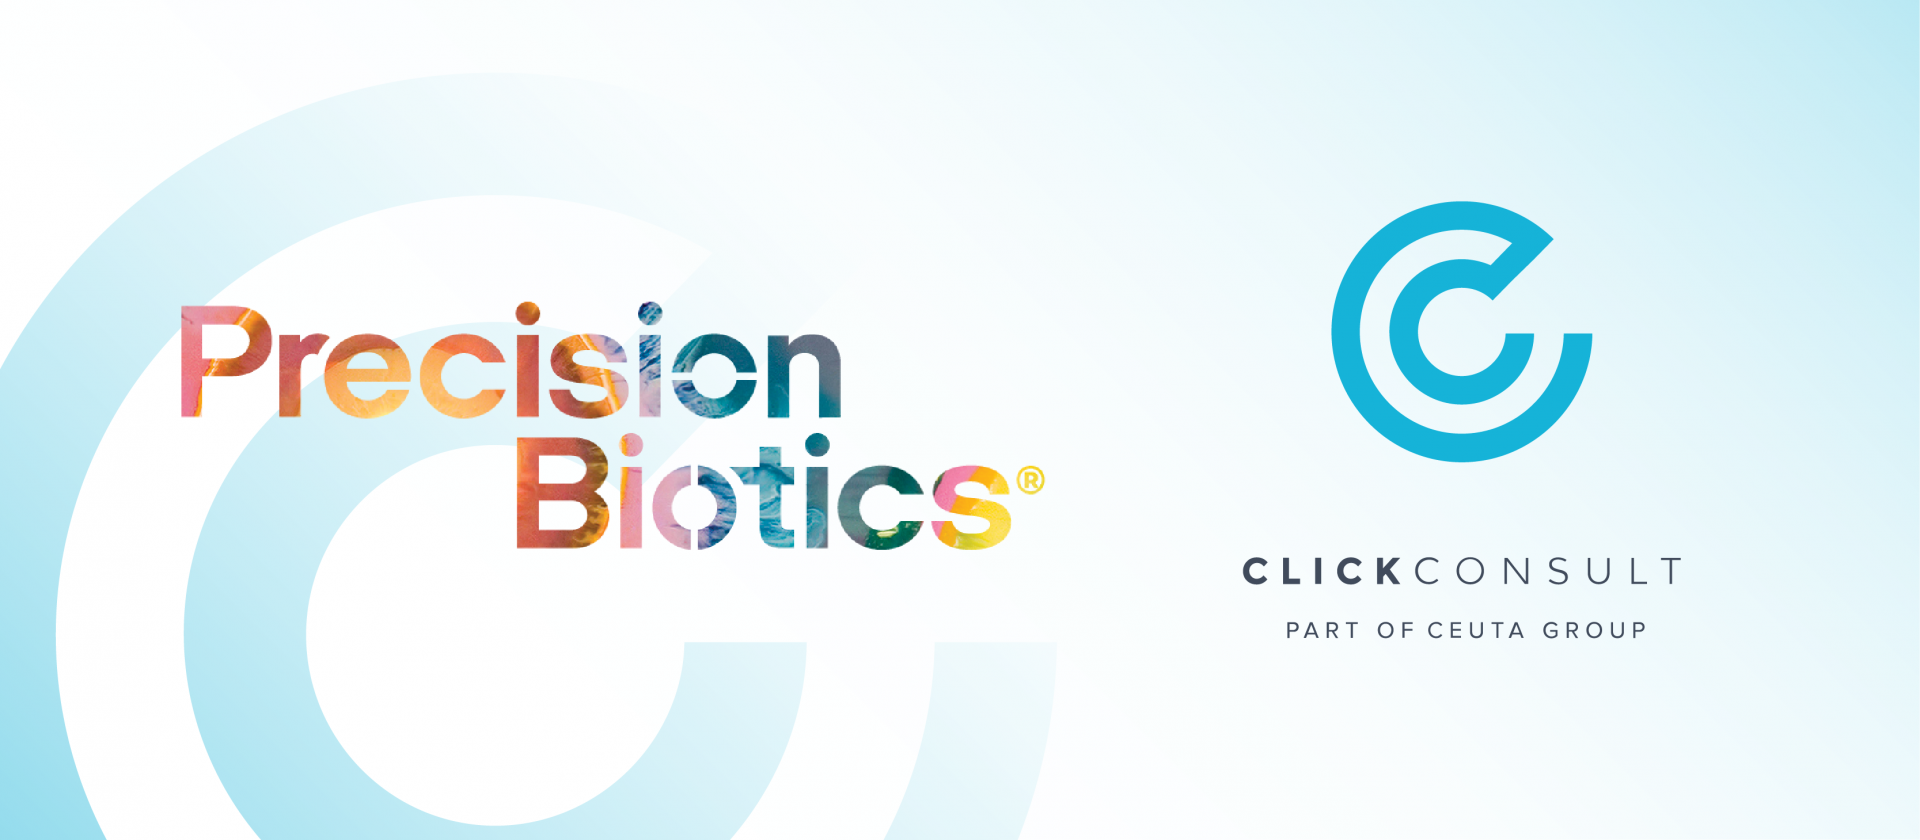 precision biotics and click consult partnership new client win